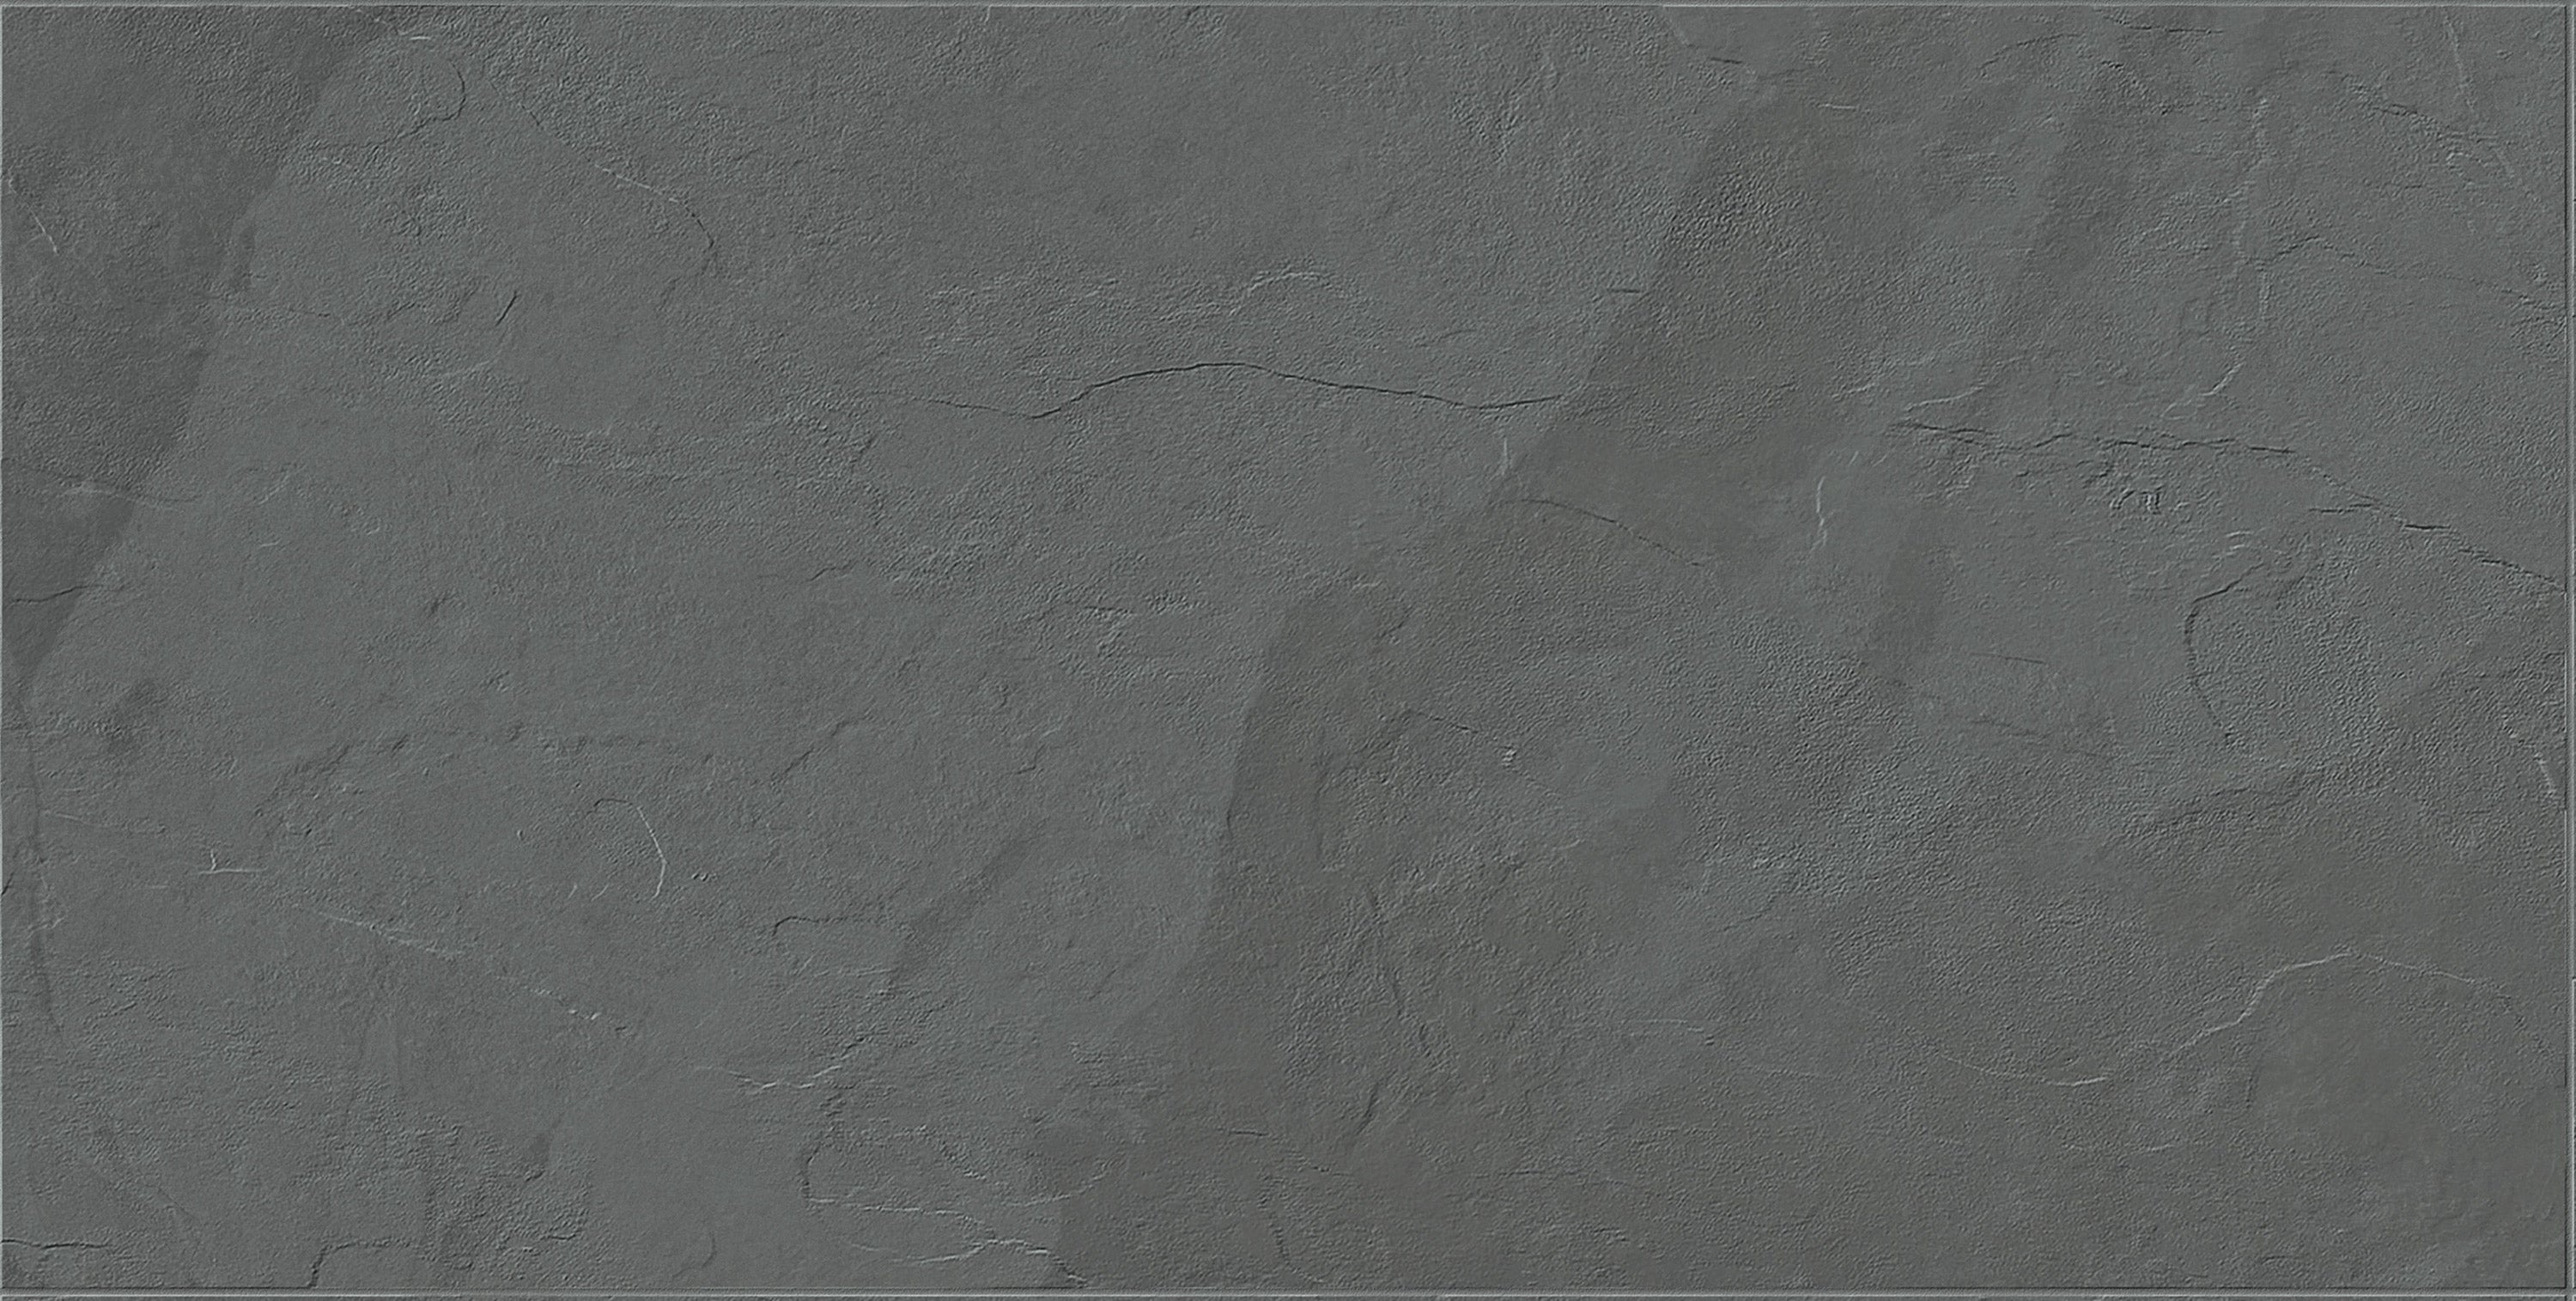 landmark frontier20 slate montauk grey paver tile 12x24x20mm matte rectified porcelain tile distributed by surface group international